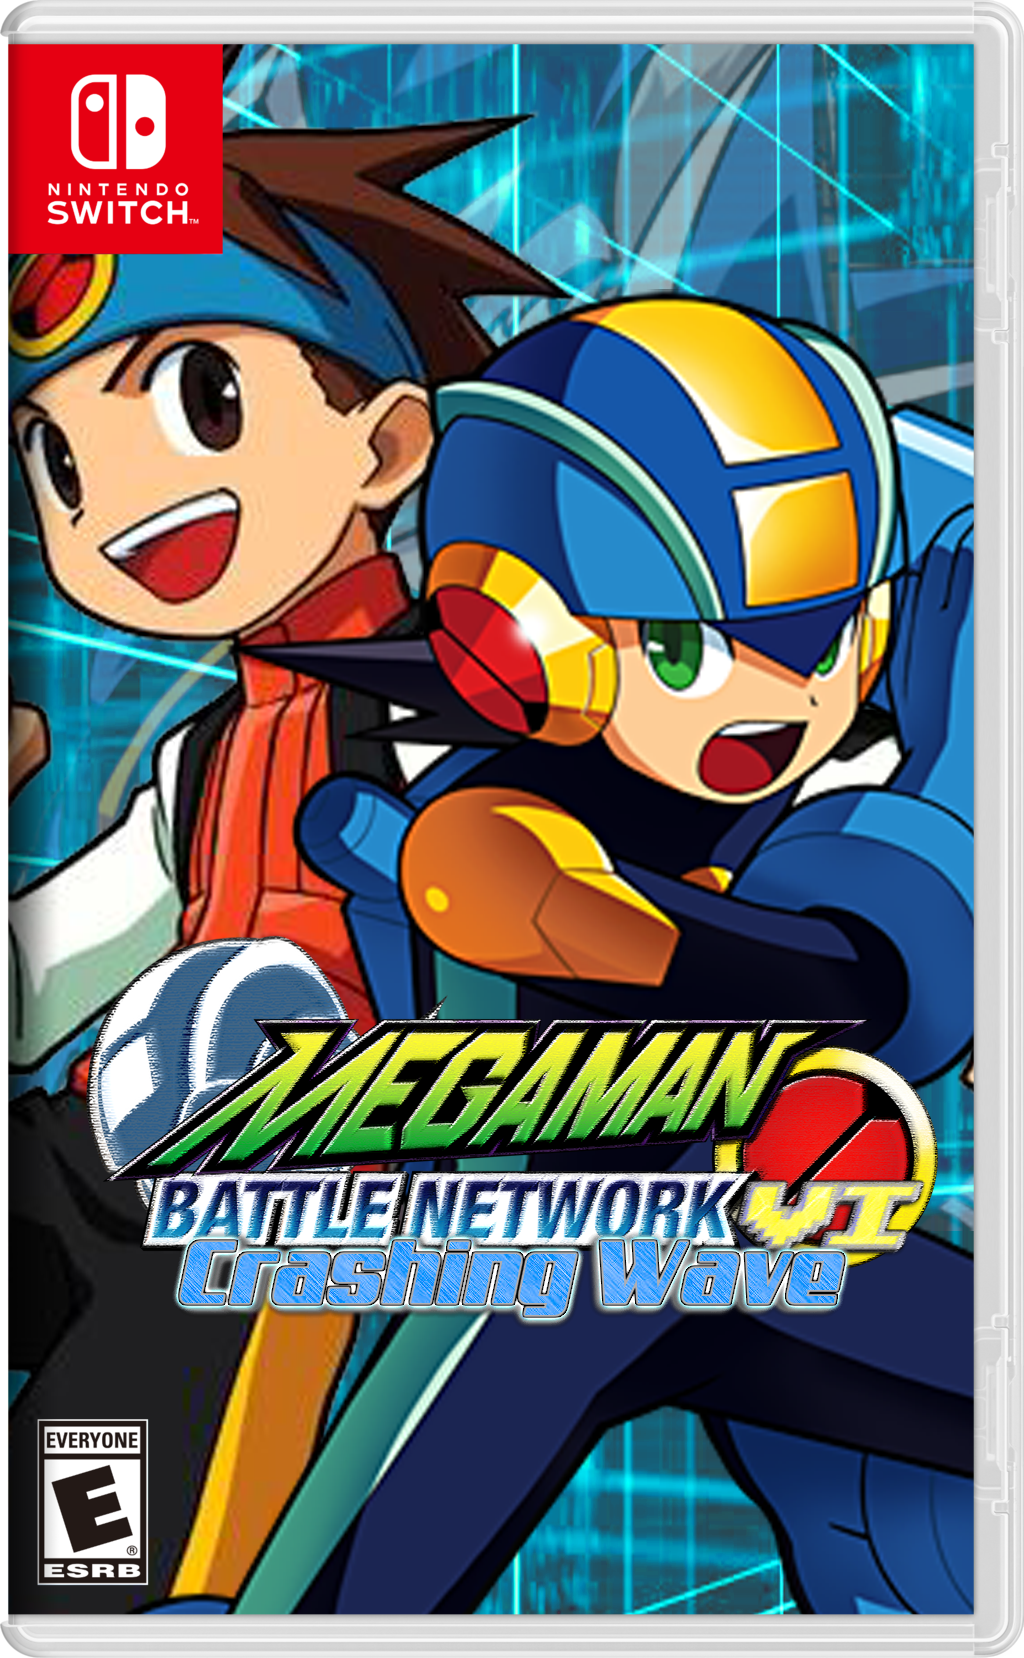 Megaman Battle Network VII, Fantendo - Game Ideas & More